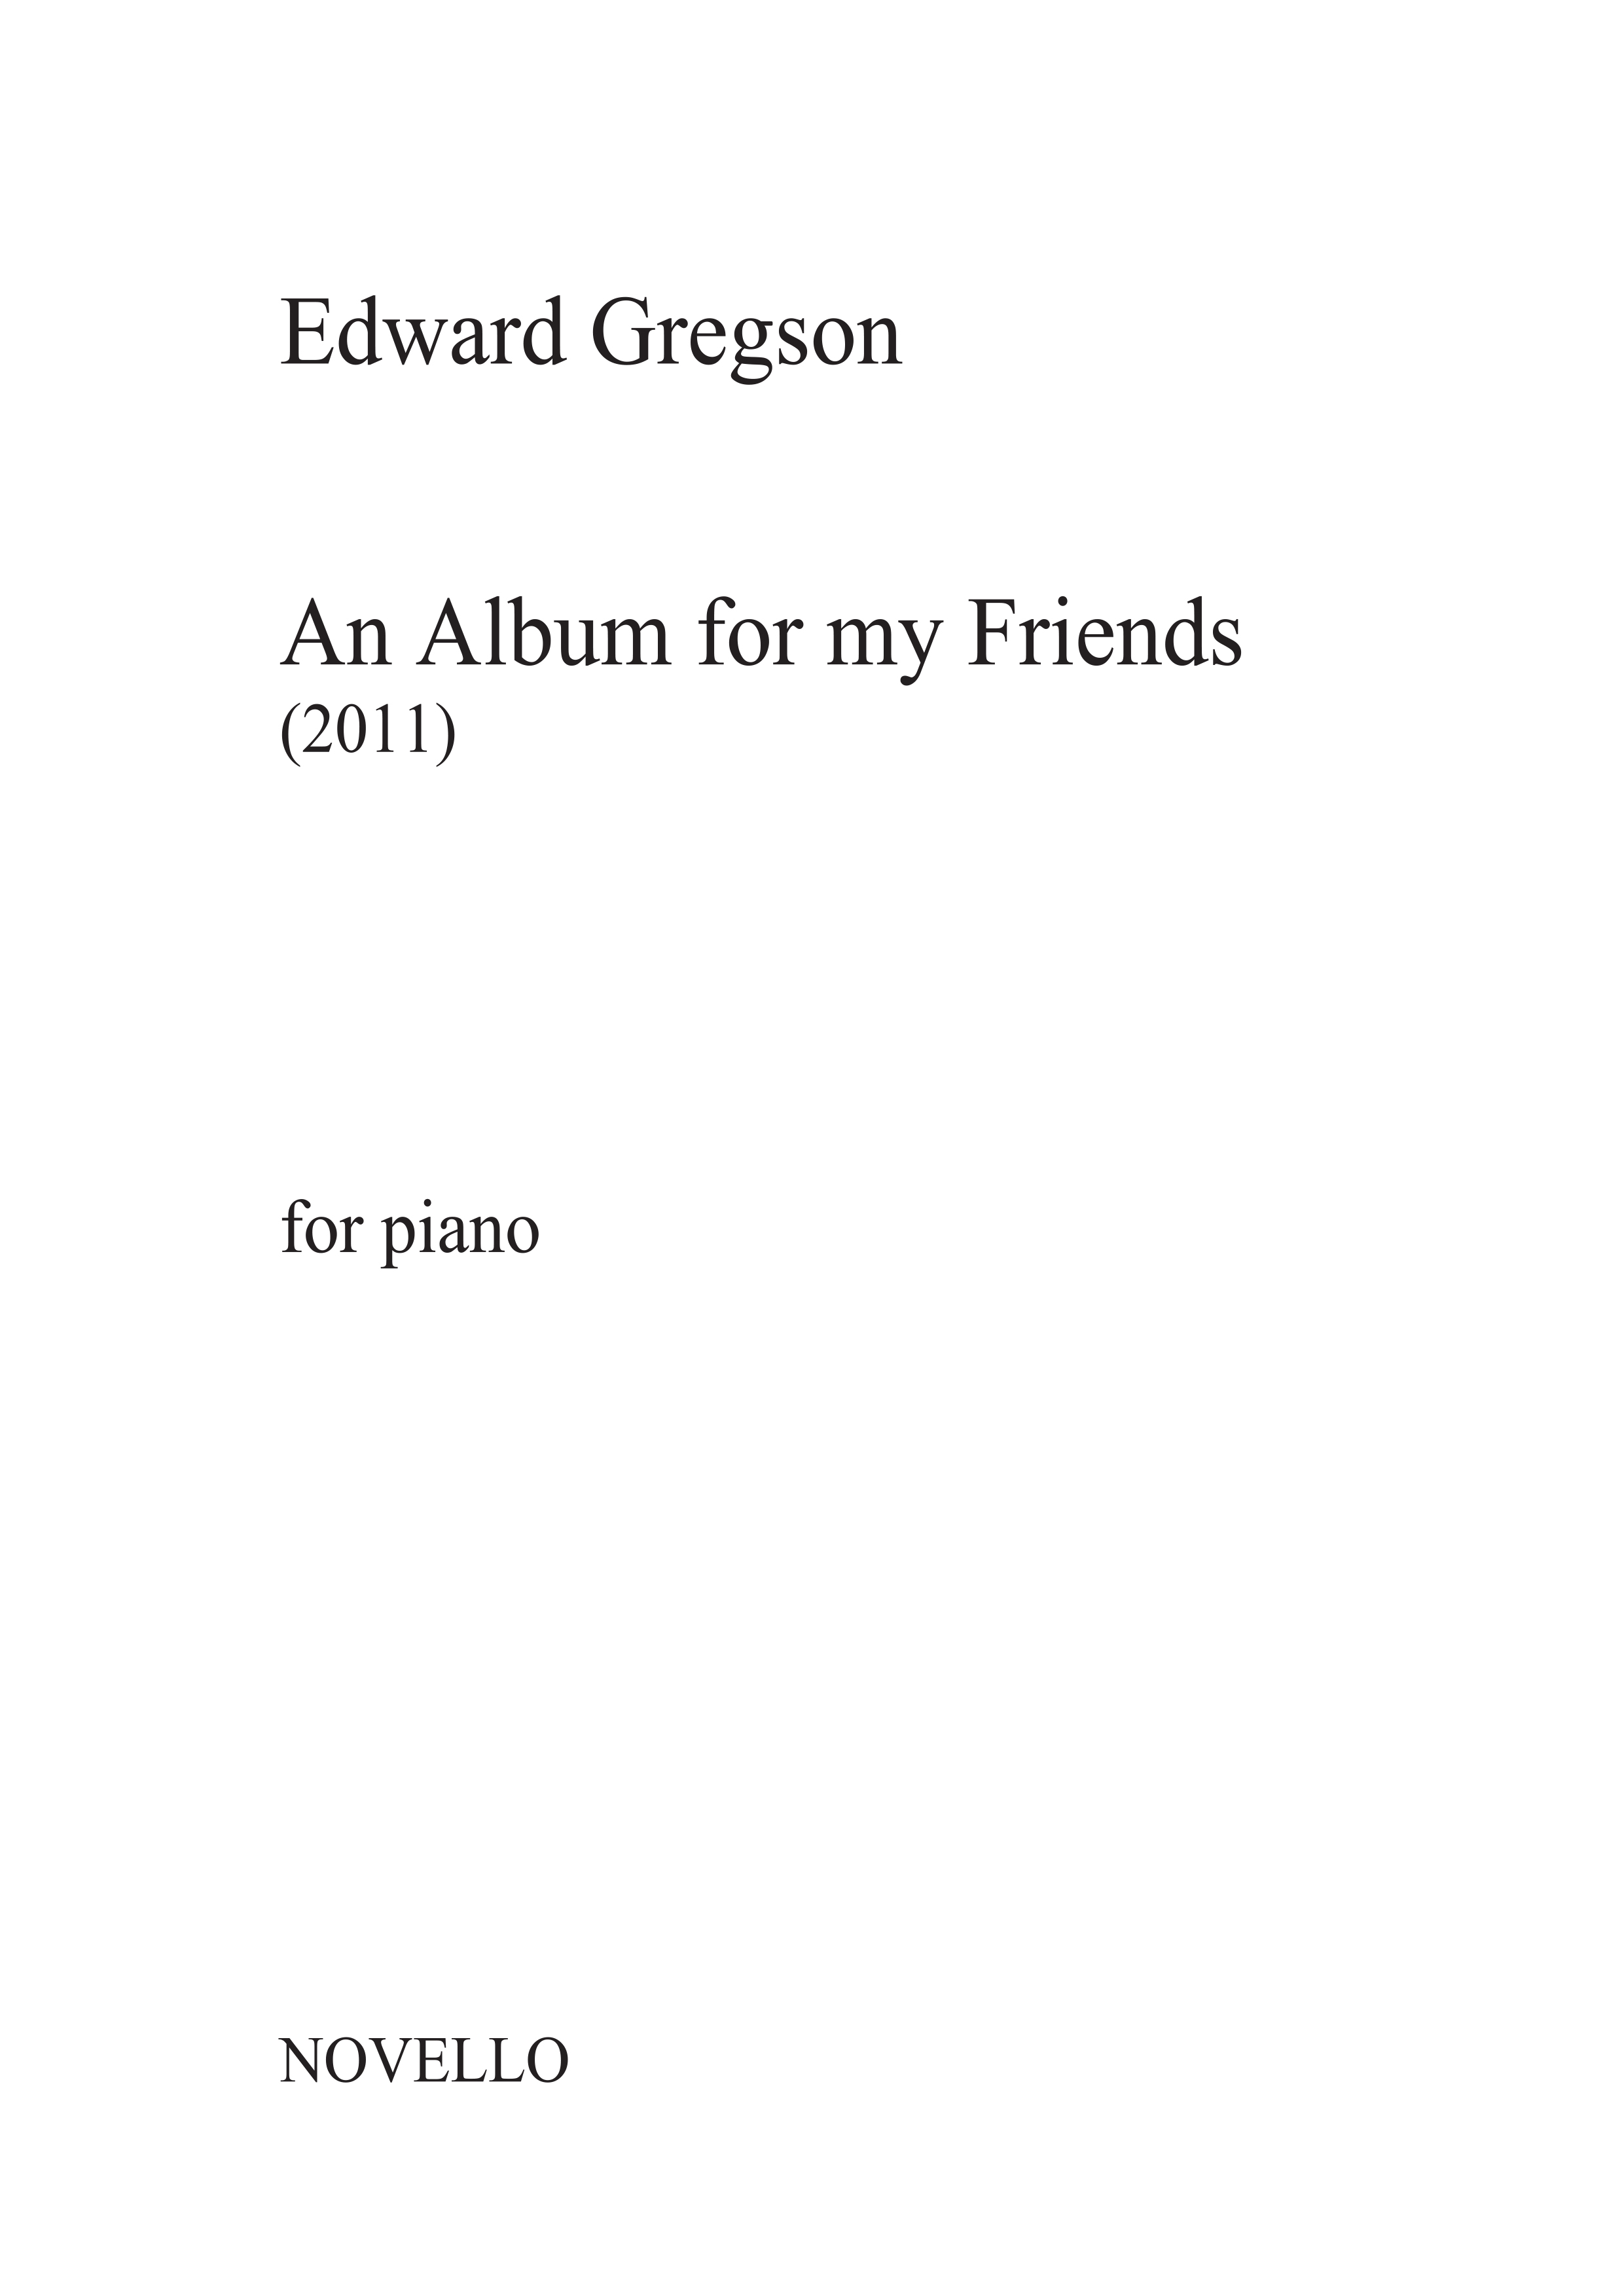 Edward Gregson: An Album for my Friends